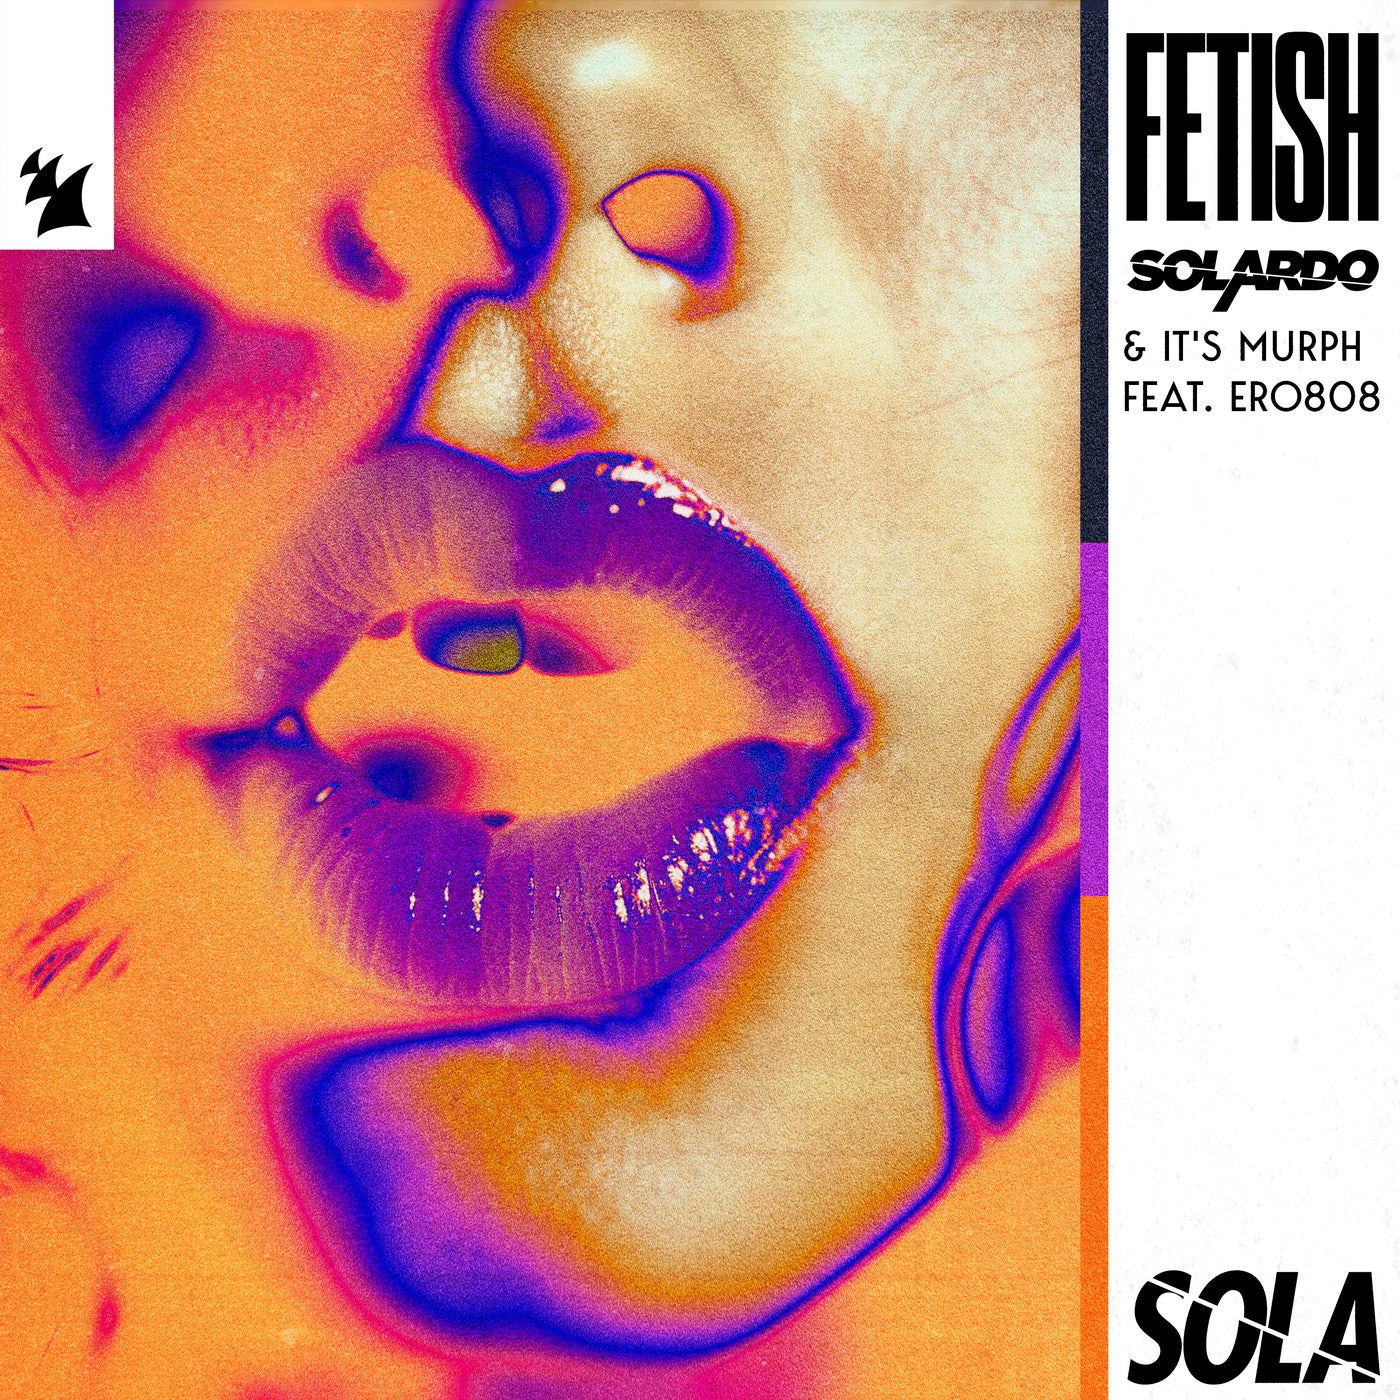 image cover: Solardo, Ero808, it's murph - Fetish on Sola